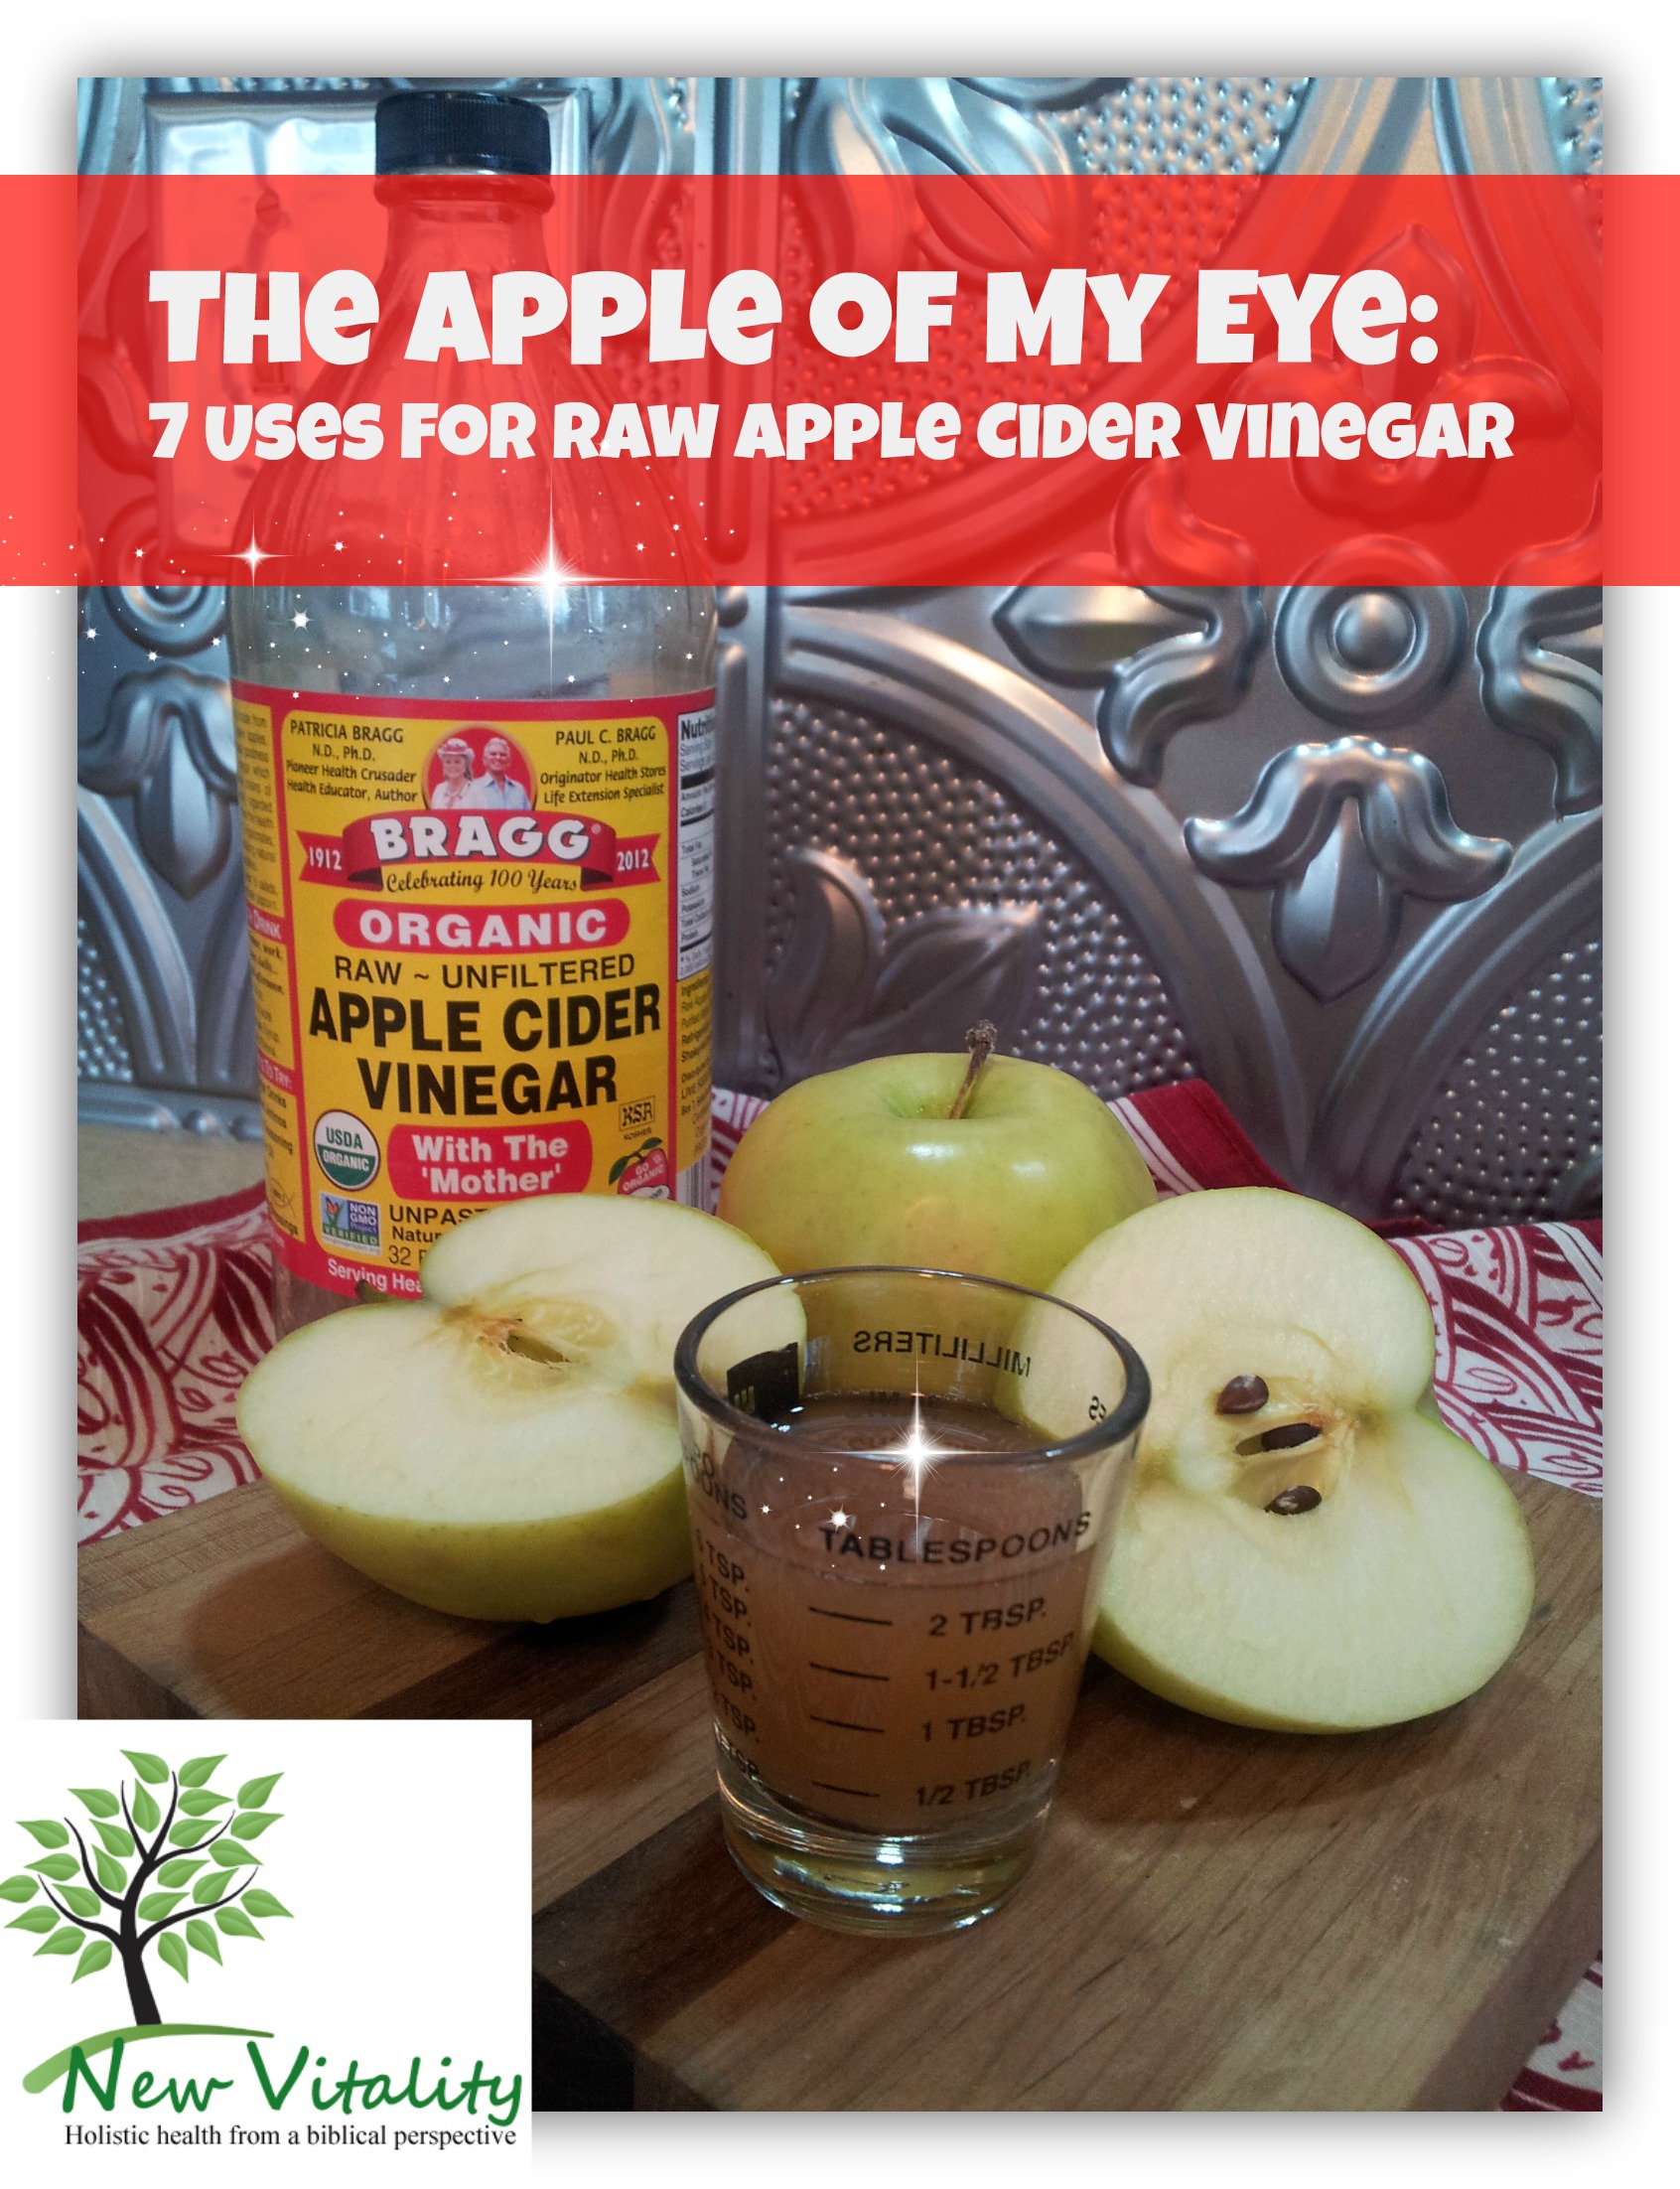 7 uses for raw apple cider vinegar